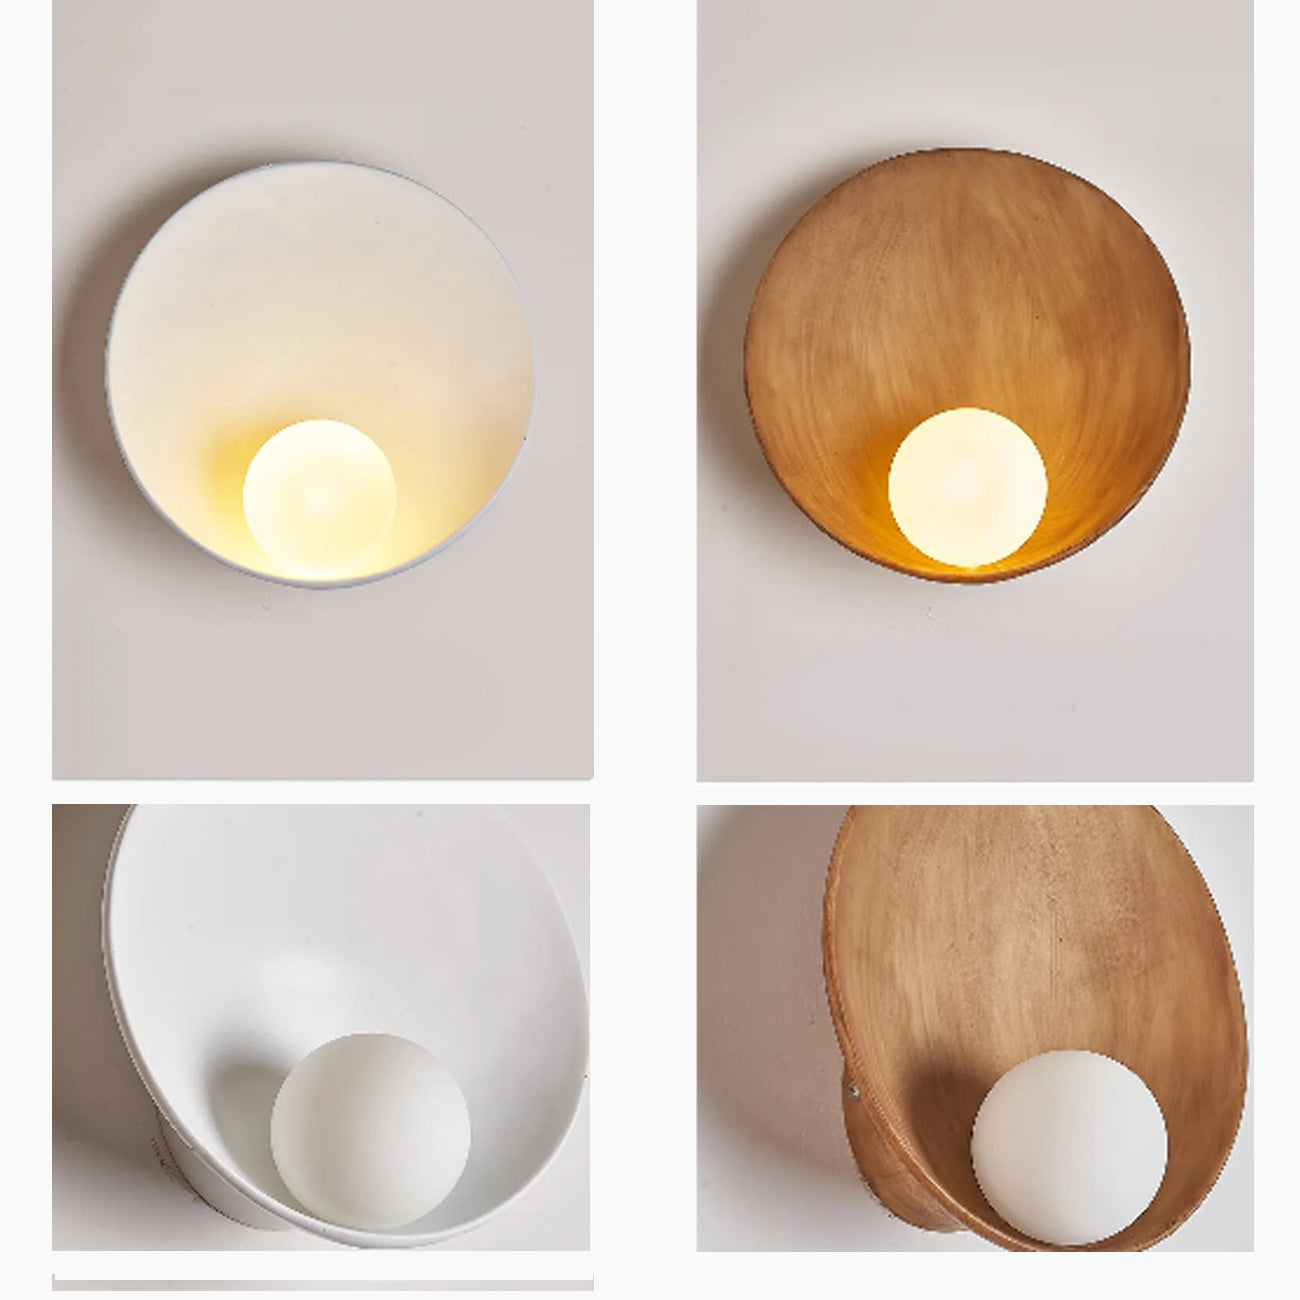 Oriental Style Dish Wall Fixture Lamp